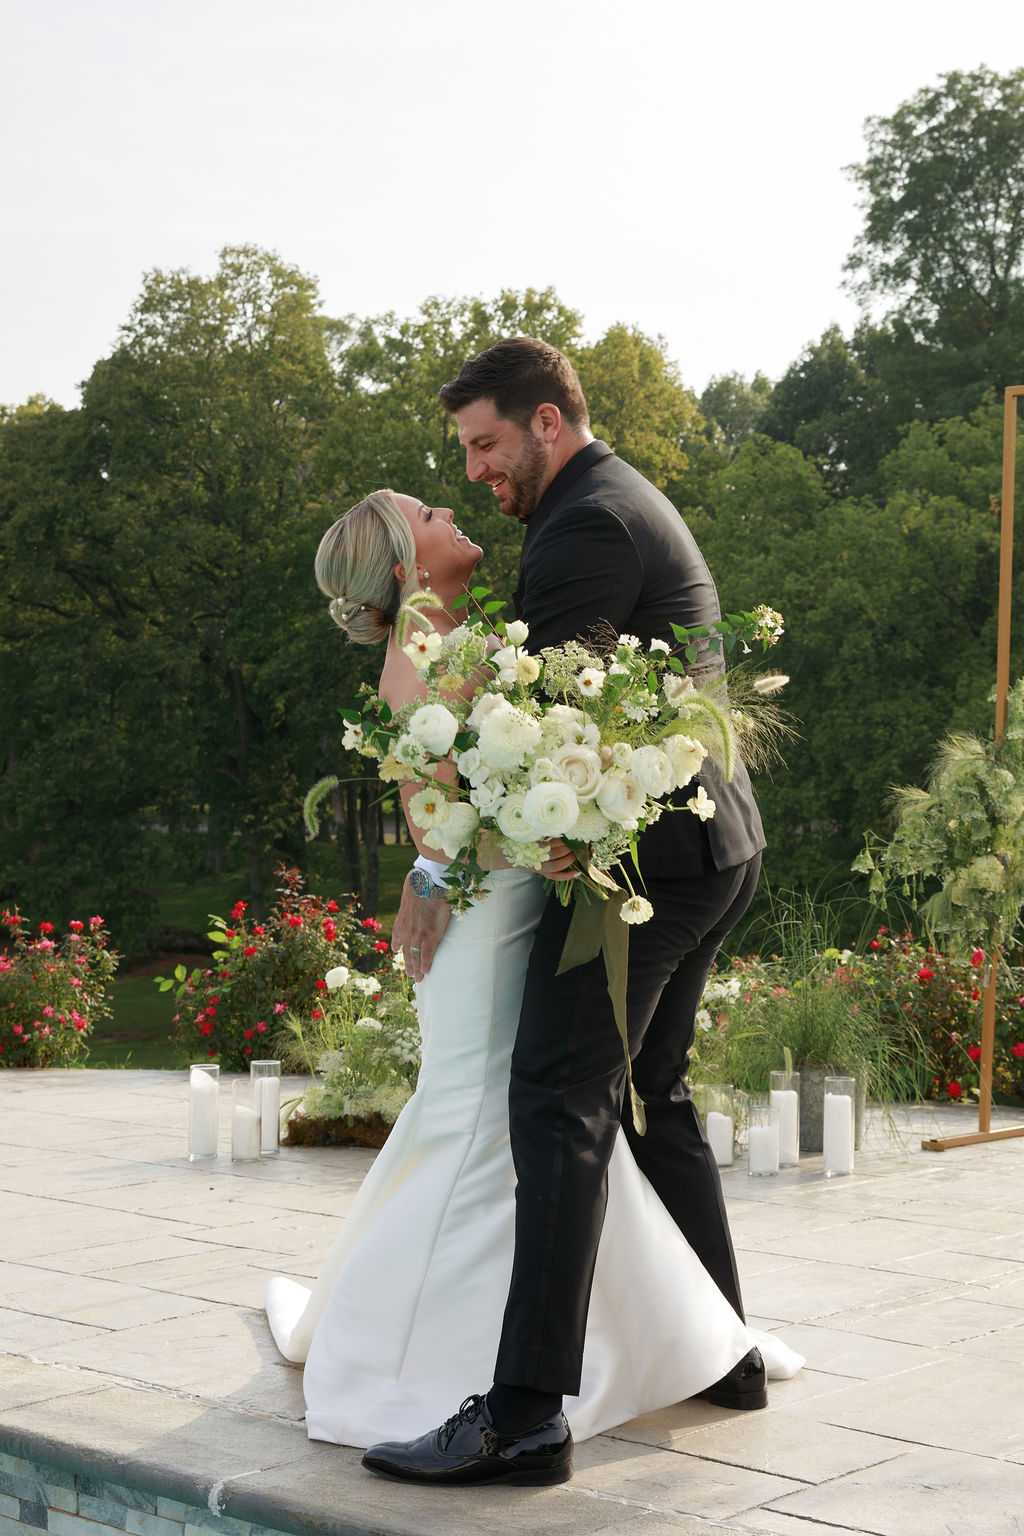 Newlyweds dance by a pool in a rose garden washington dc wedding florist